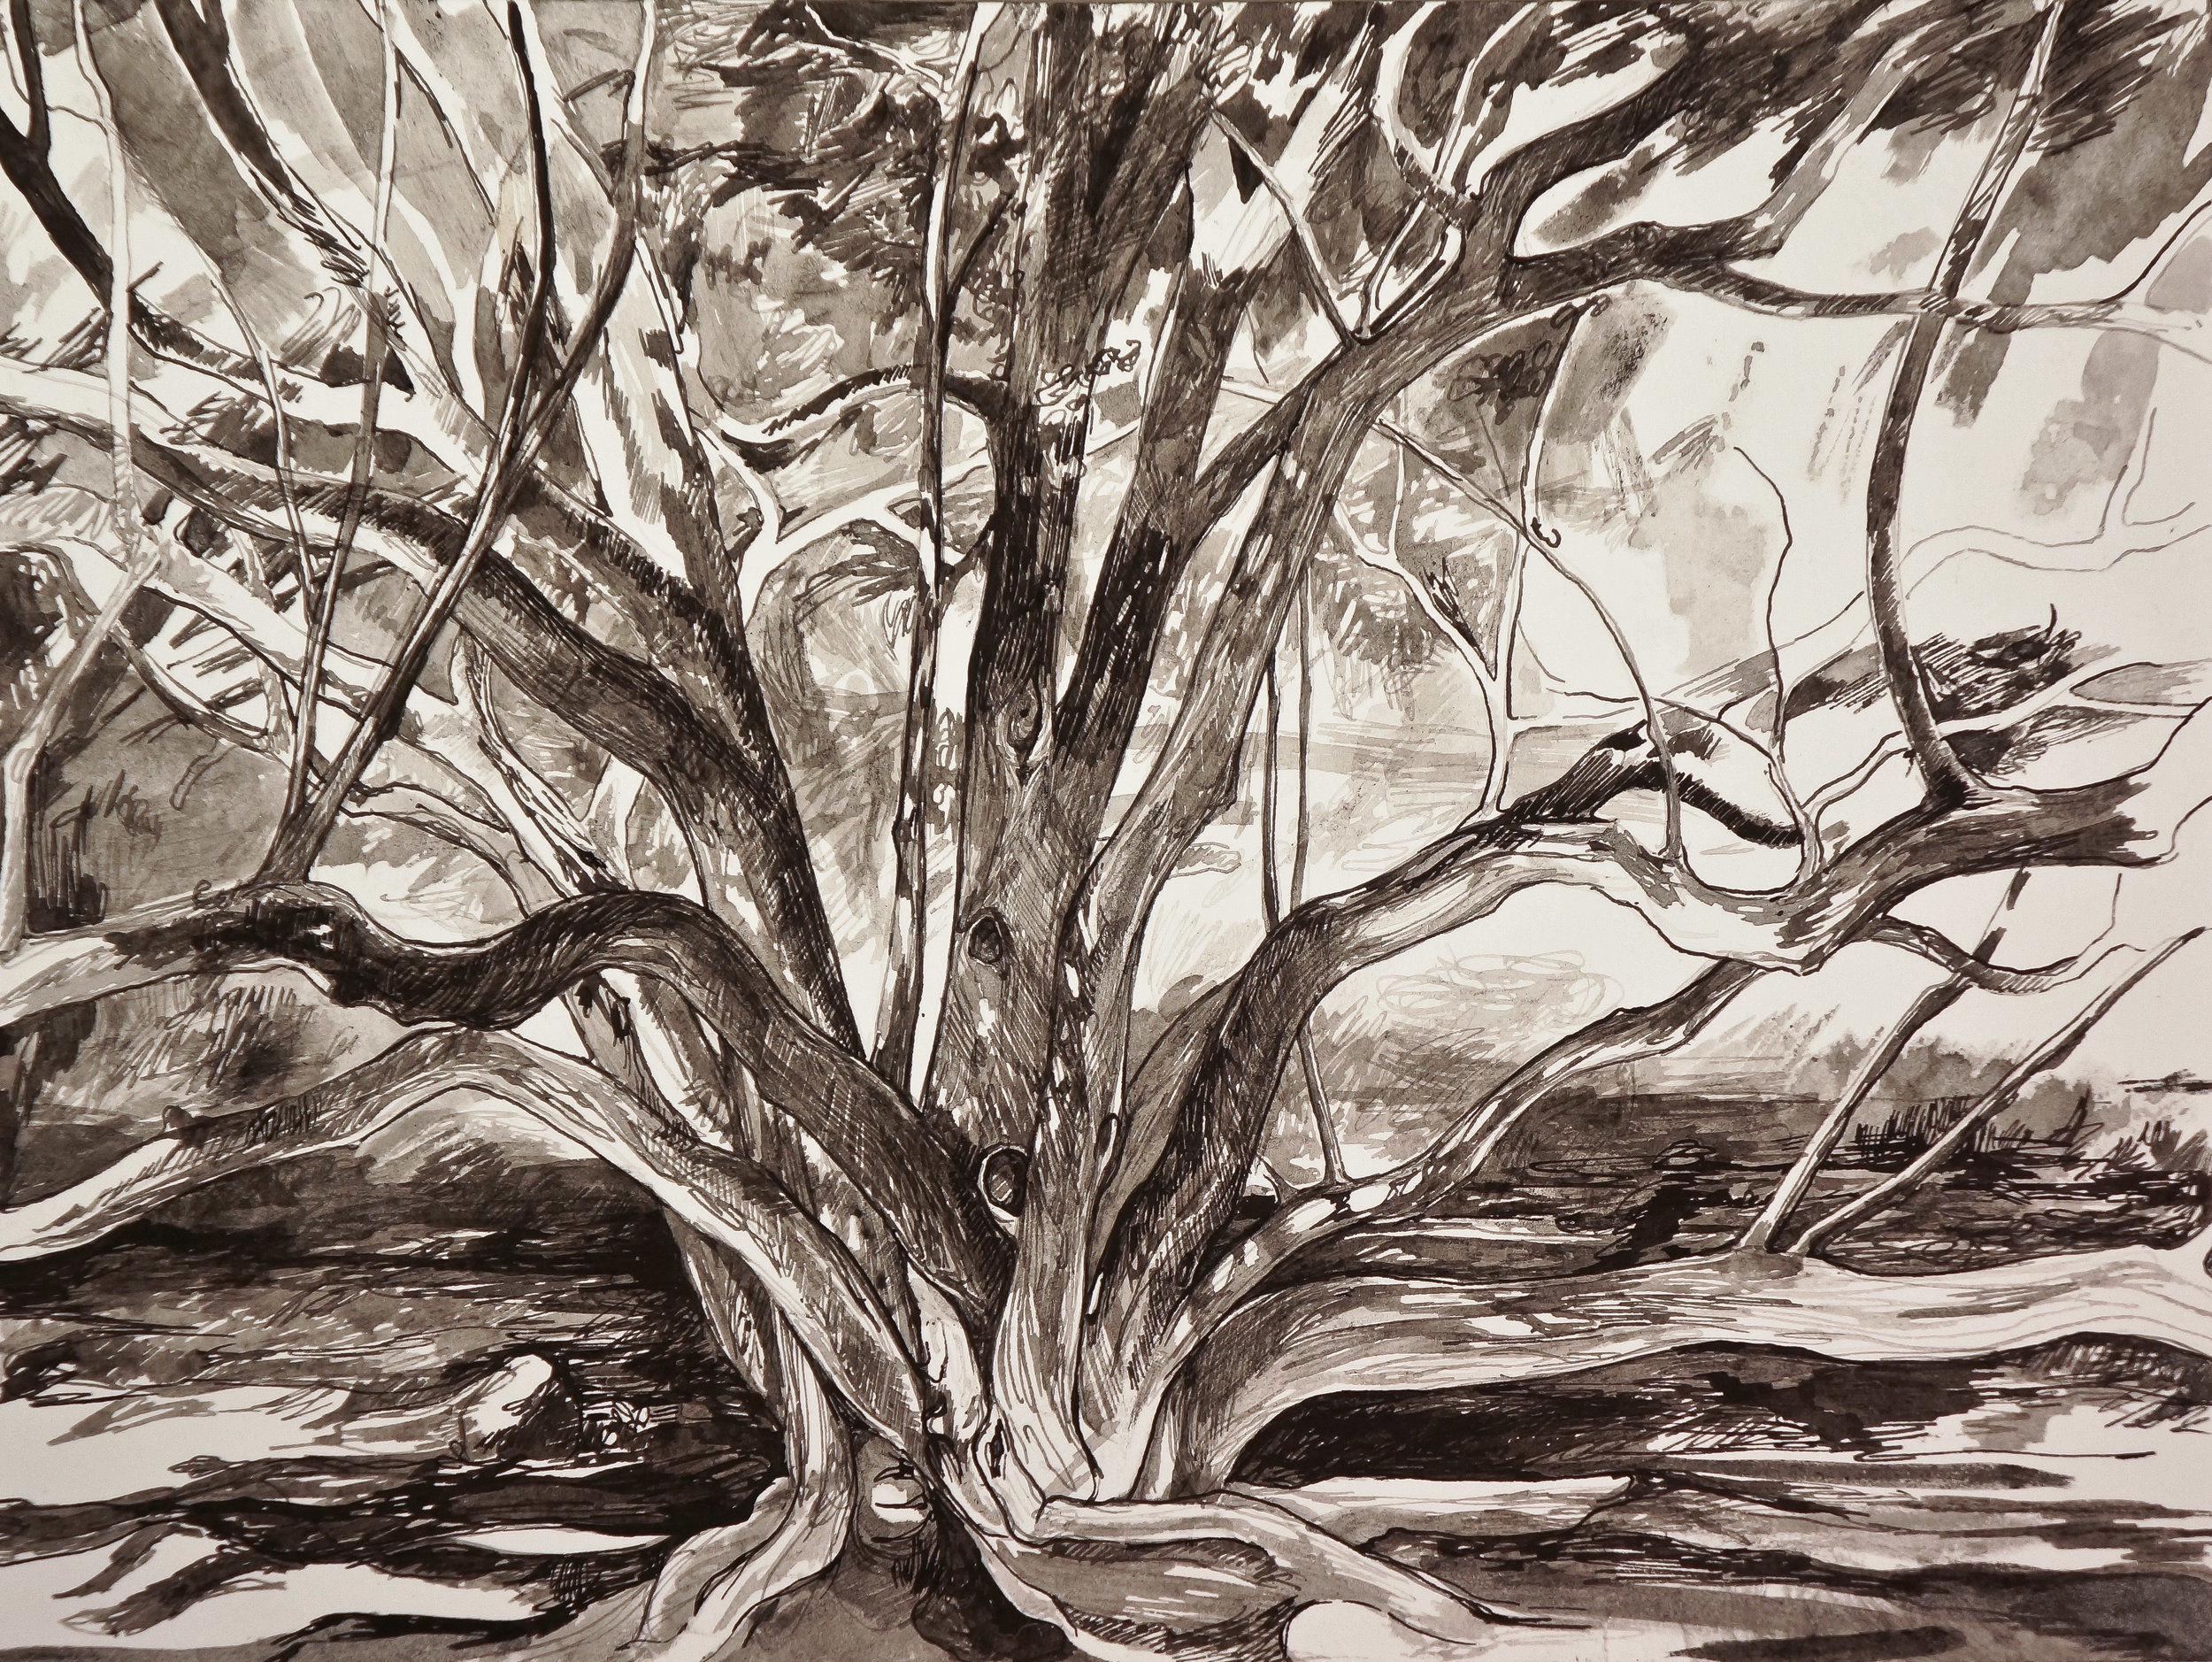  Katsura at Morris Arboretum, ink on paper, 2015 